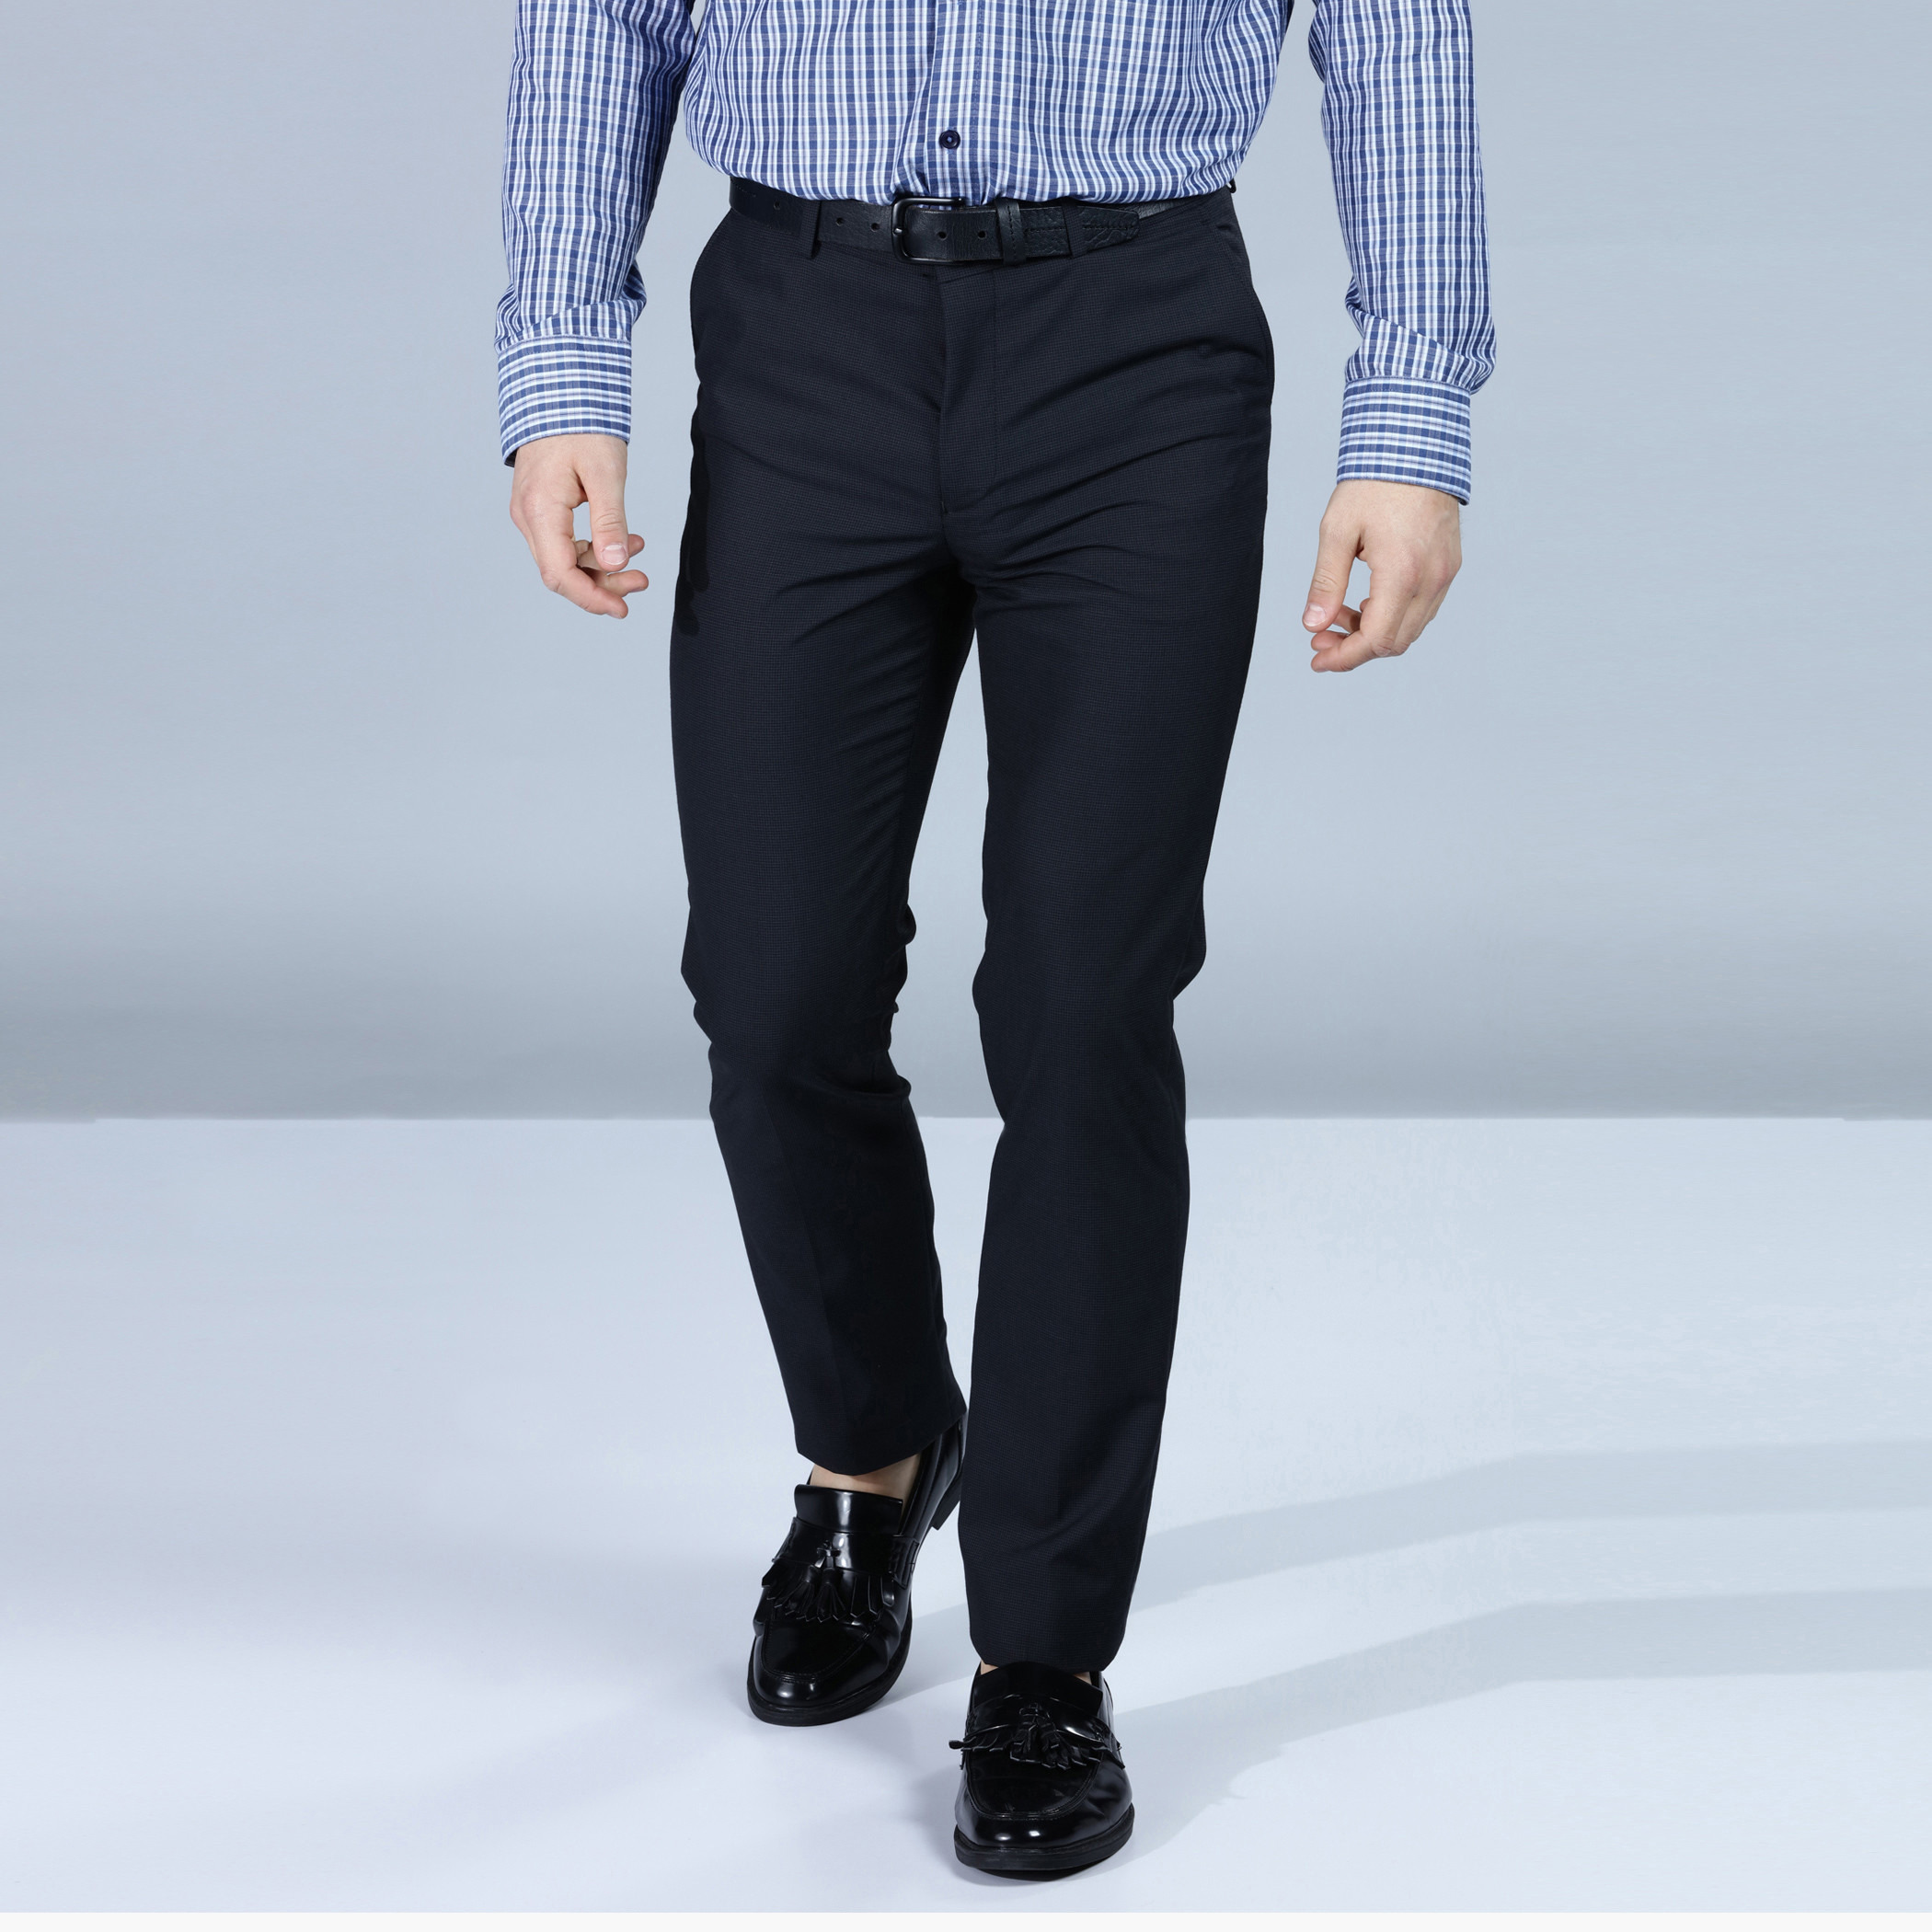 Buy Formal Pants & Formal Trousers Online in Dubai & UAE | KIABI